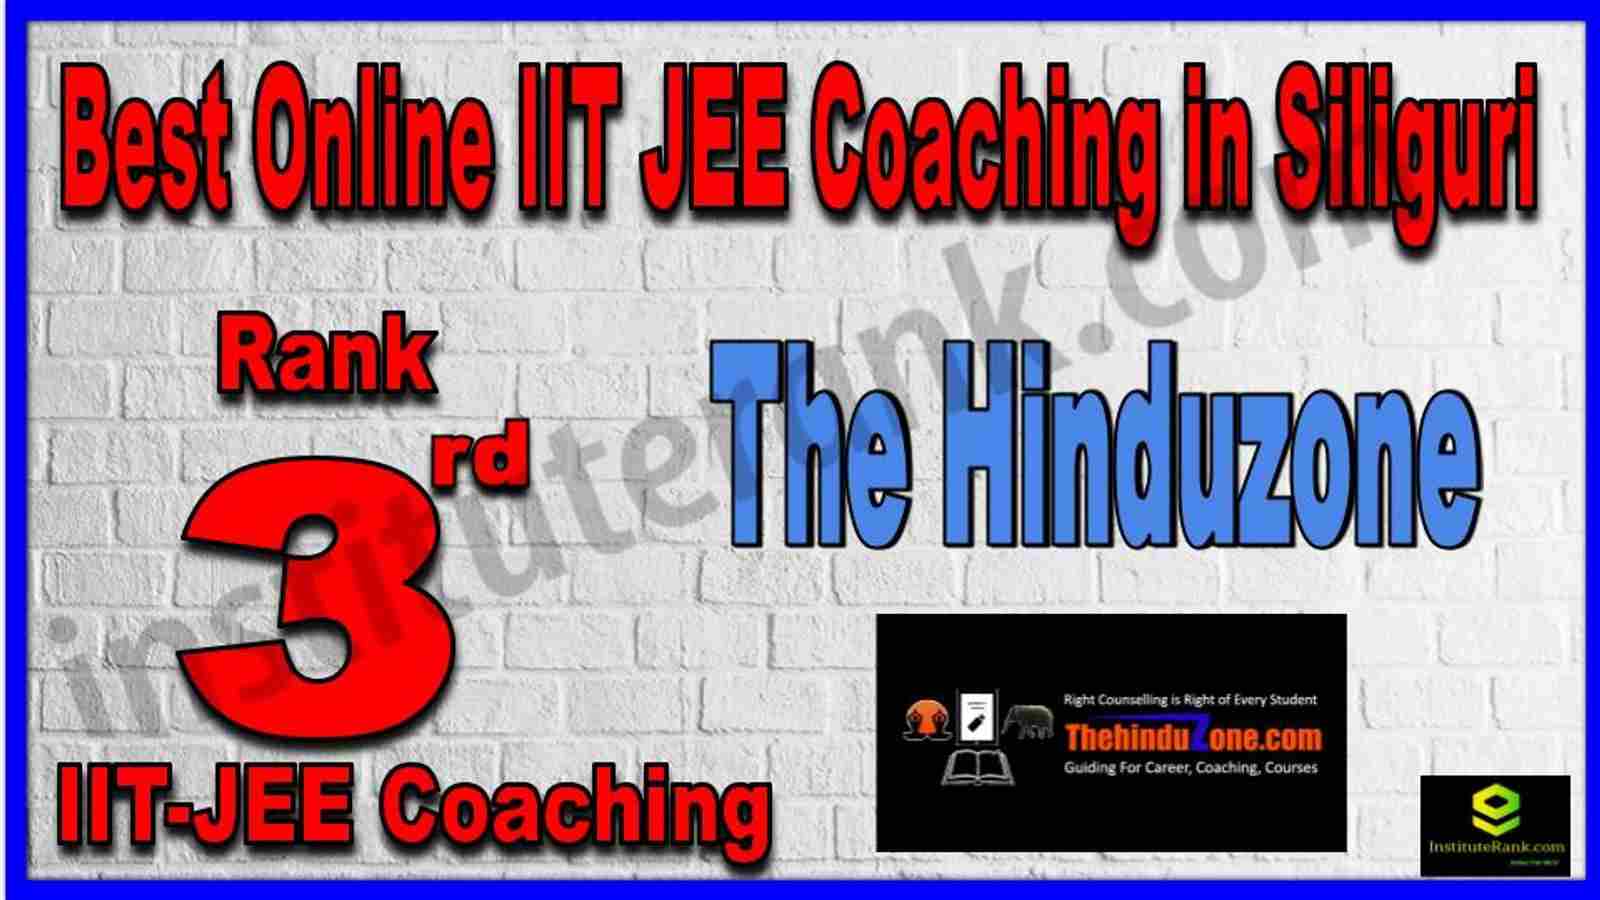 Rank 3rd Best Online IIT-JEE Coaching in Siliguri